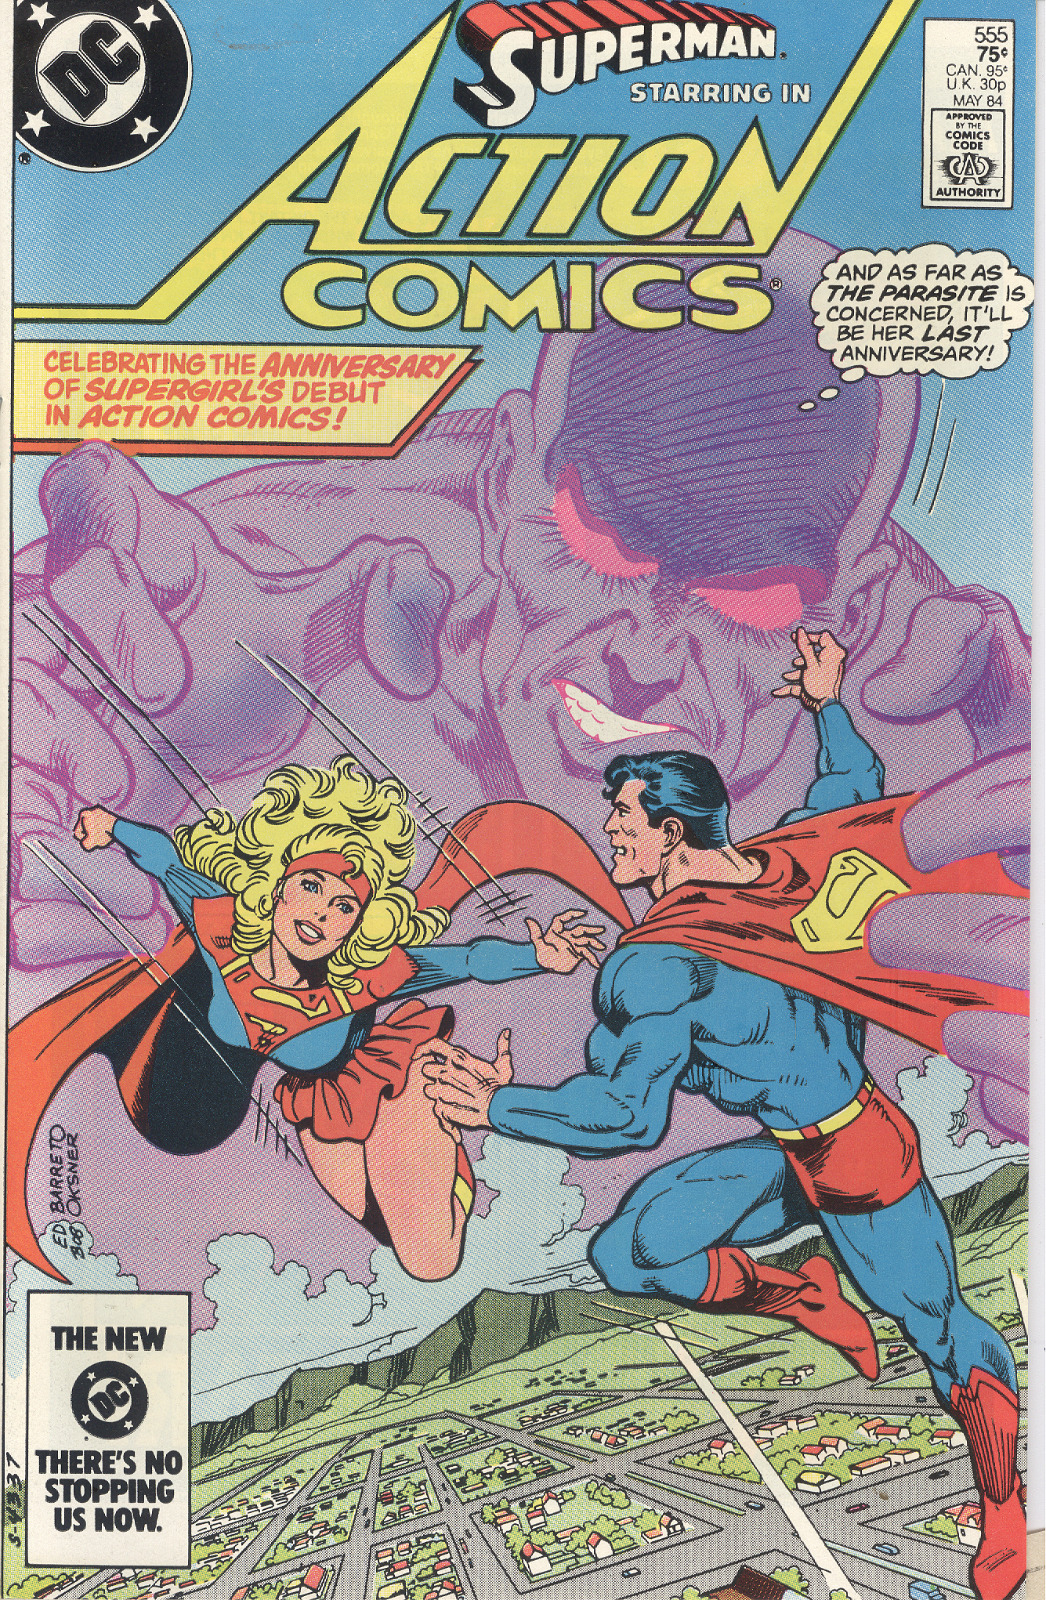 DC Comics: Superman and Supergirl #555 May 1984